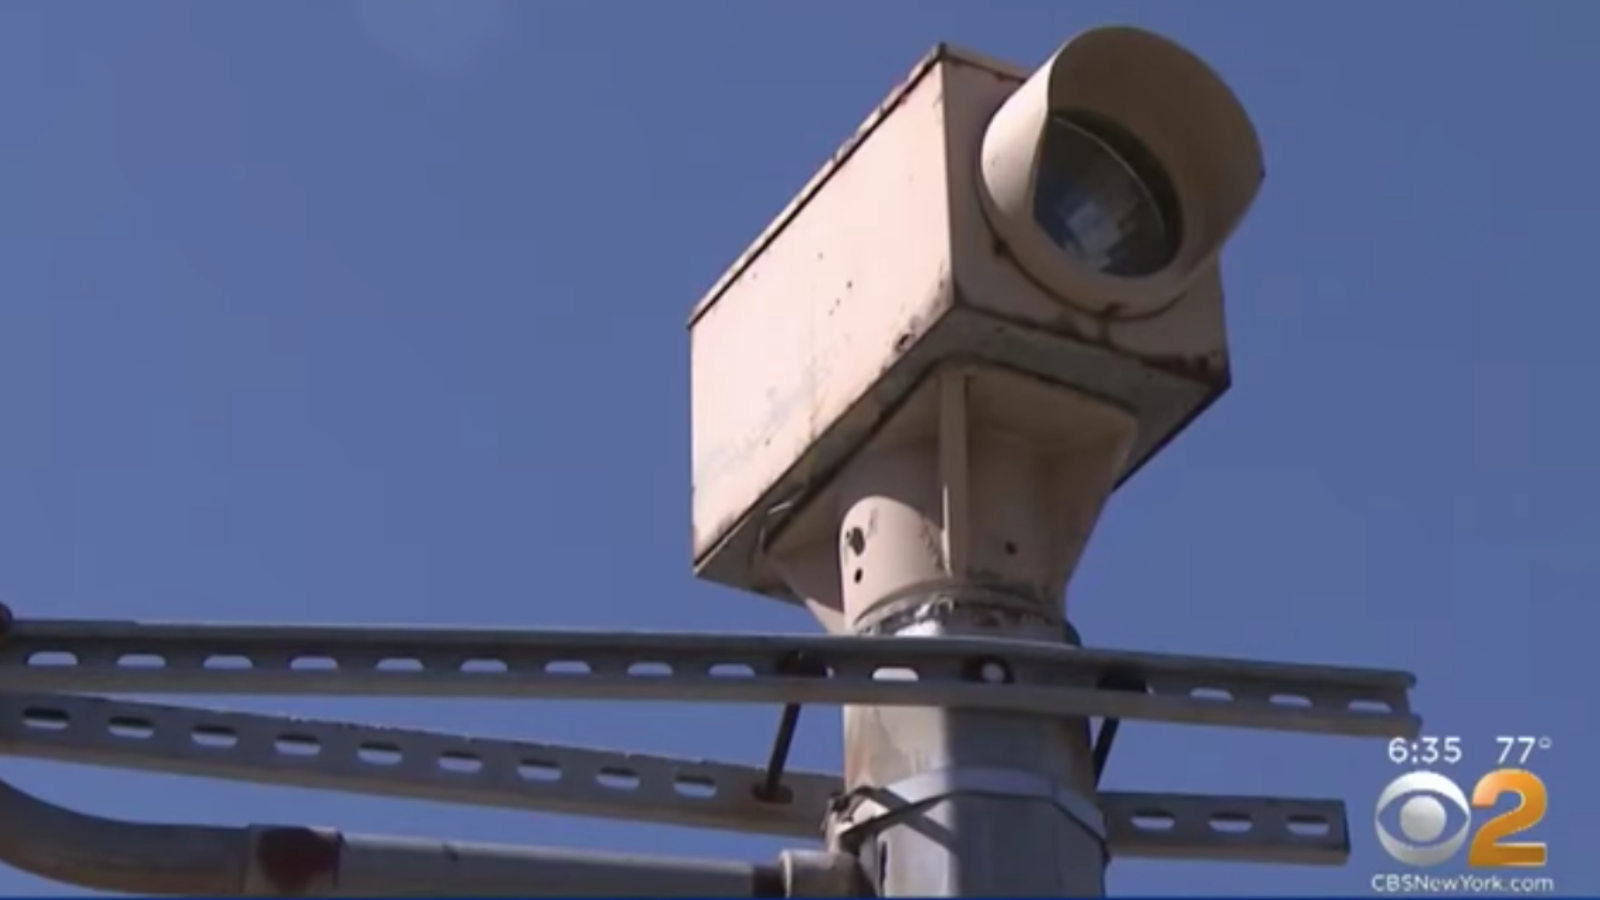 live traffic cameras new york